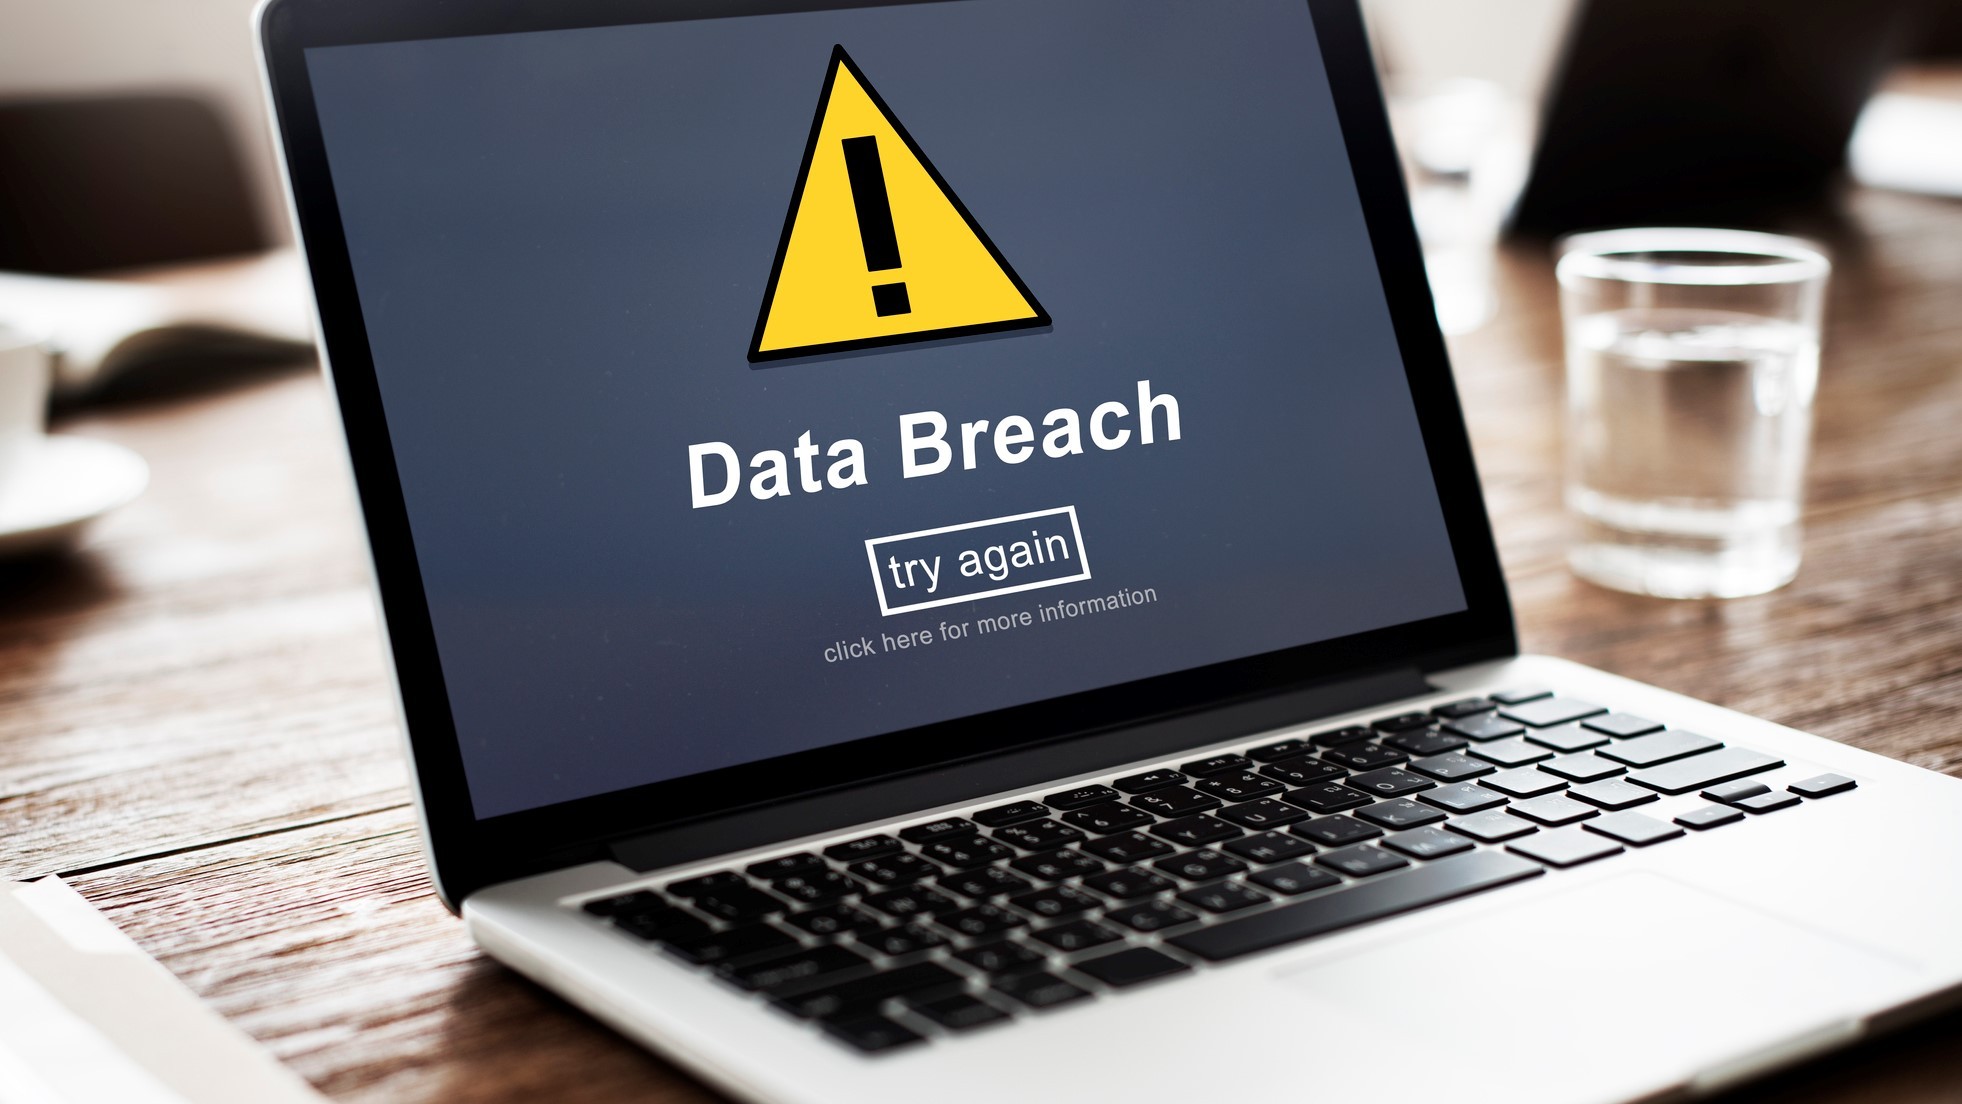 biggest data breaches of 2019